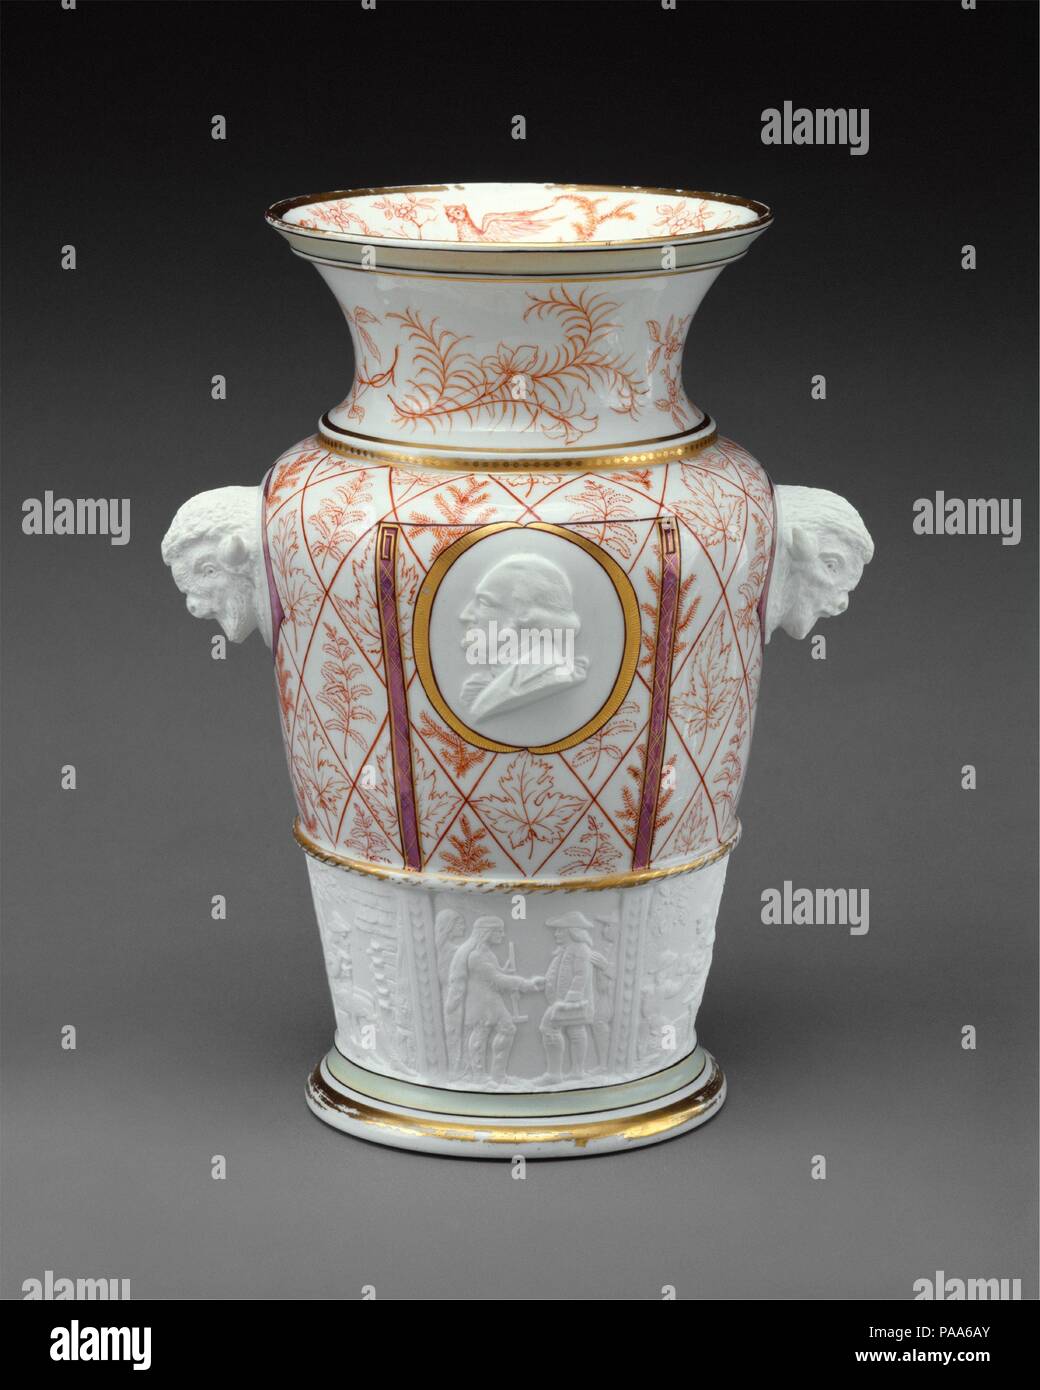 Century Vase. Culture: American. Designer: Designed by Karl L. H. Müller  (ca. 1820-1887). Dimensions: H. 12 3/4 in. (32.4 cm). Manufacturer:  Manufactured by Union Porcelain Works (1863-ca. 1922). Date: ca. 1876.  Nationalistic